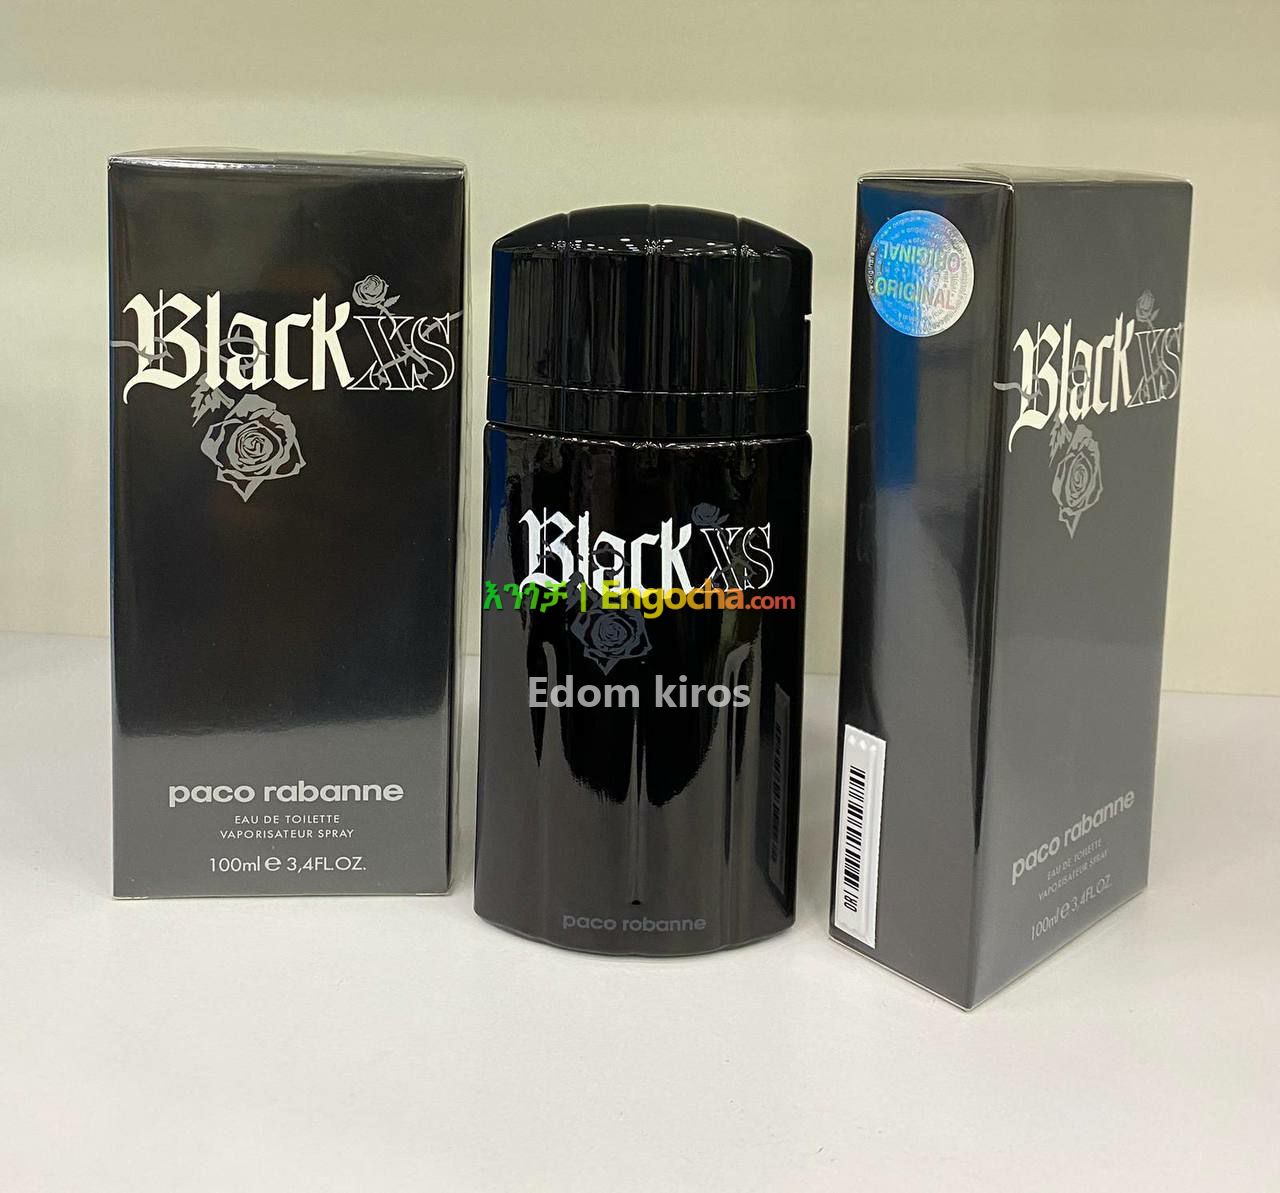 PACO Rabbane BLACK EXCESS for sale & price in Ethiopia - Engocha.com ...